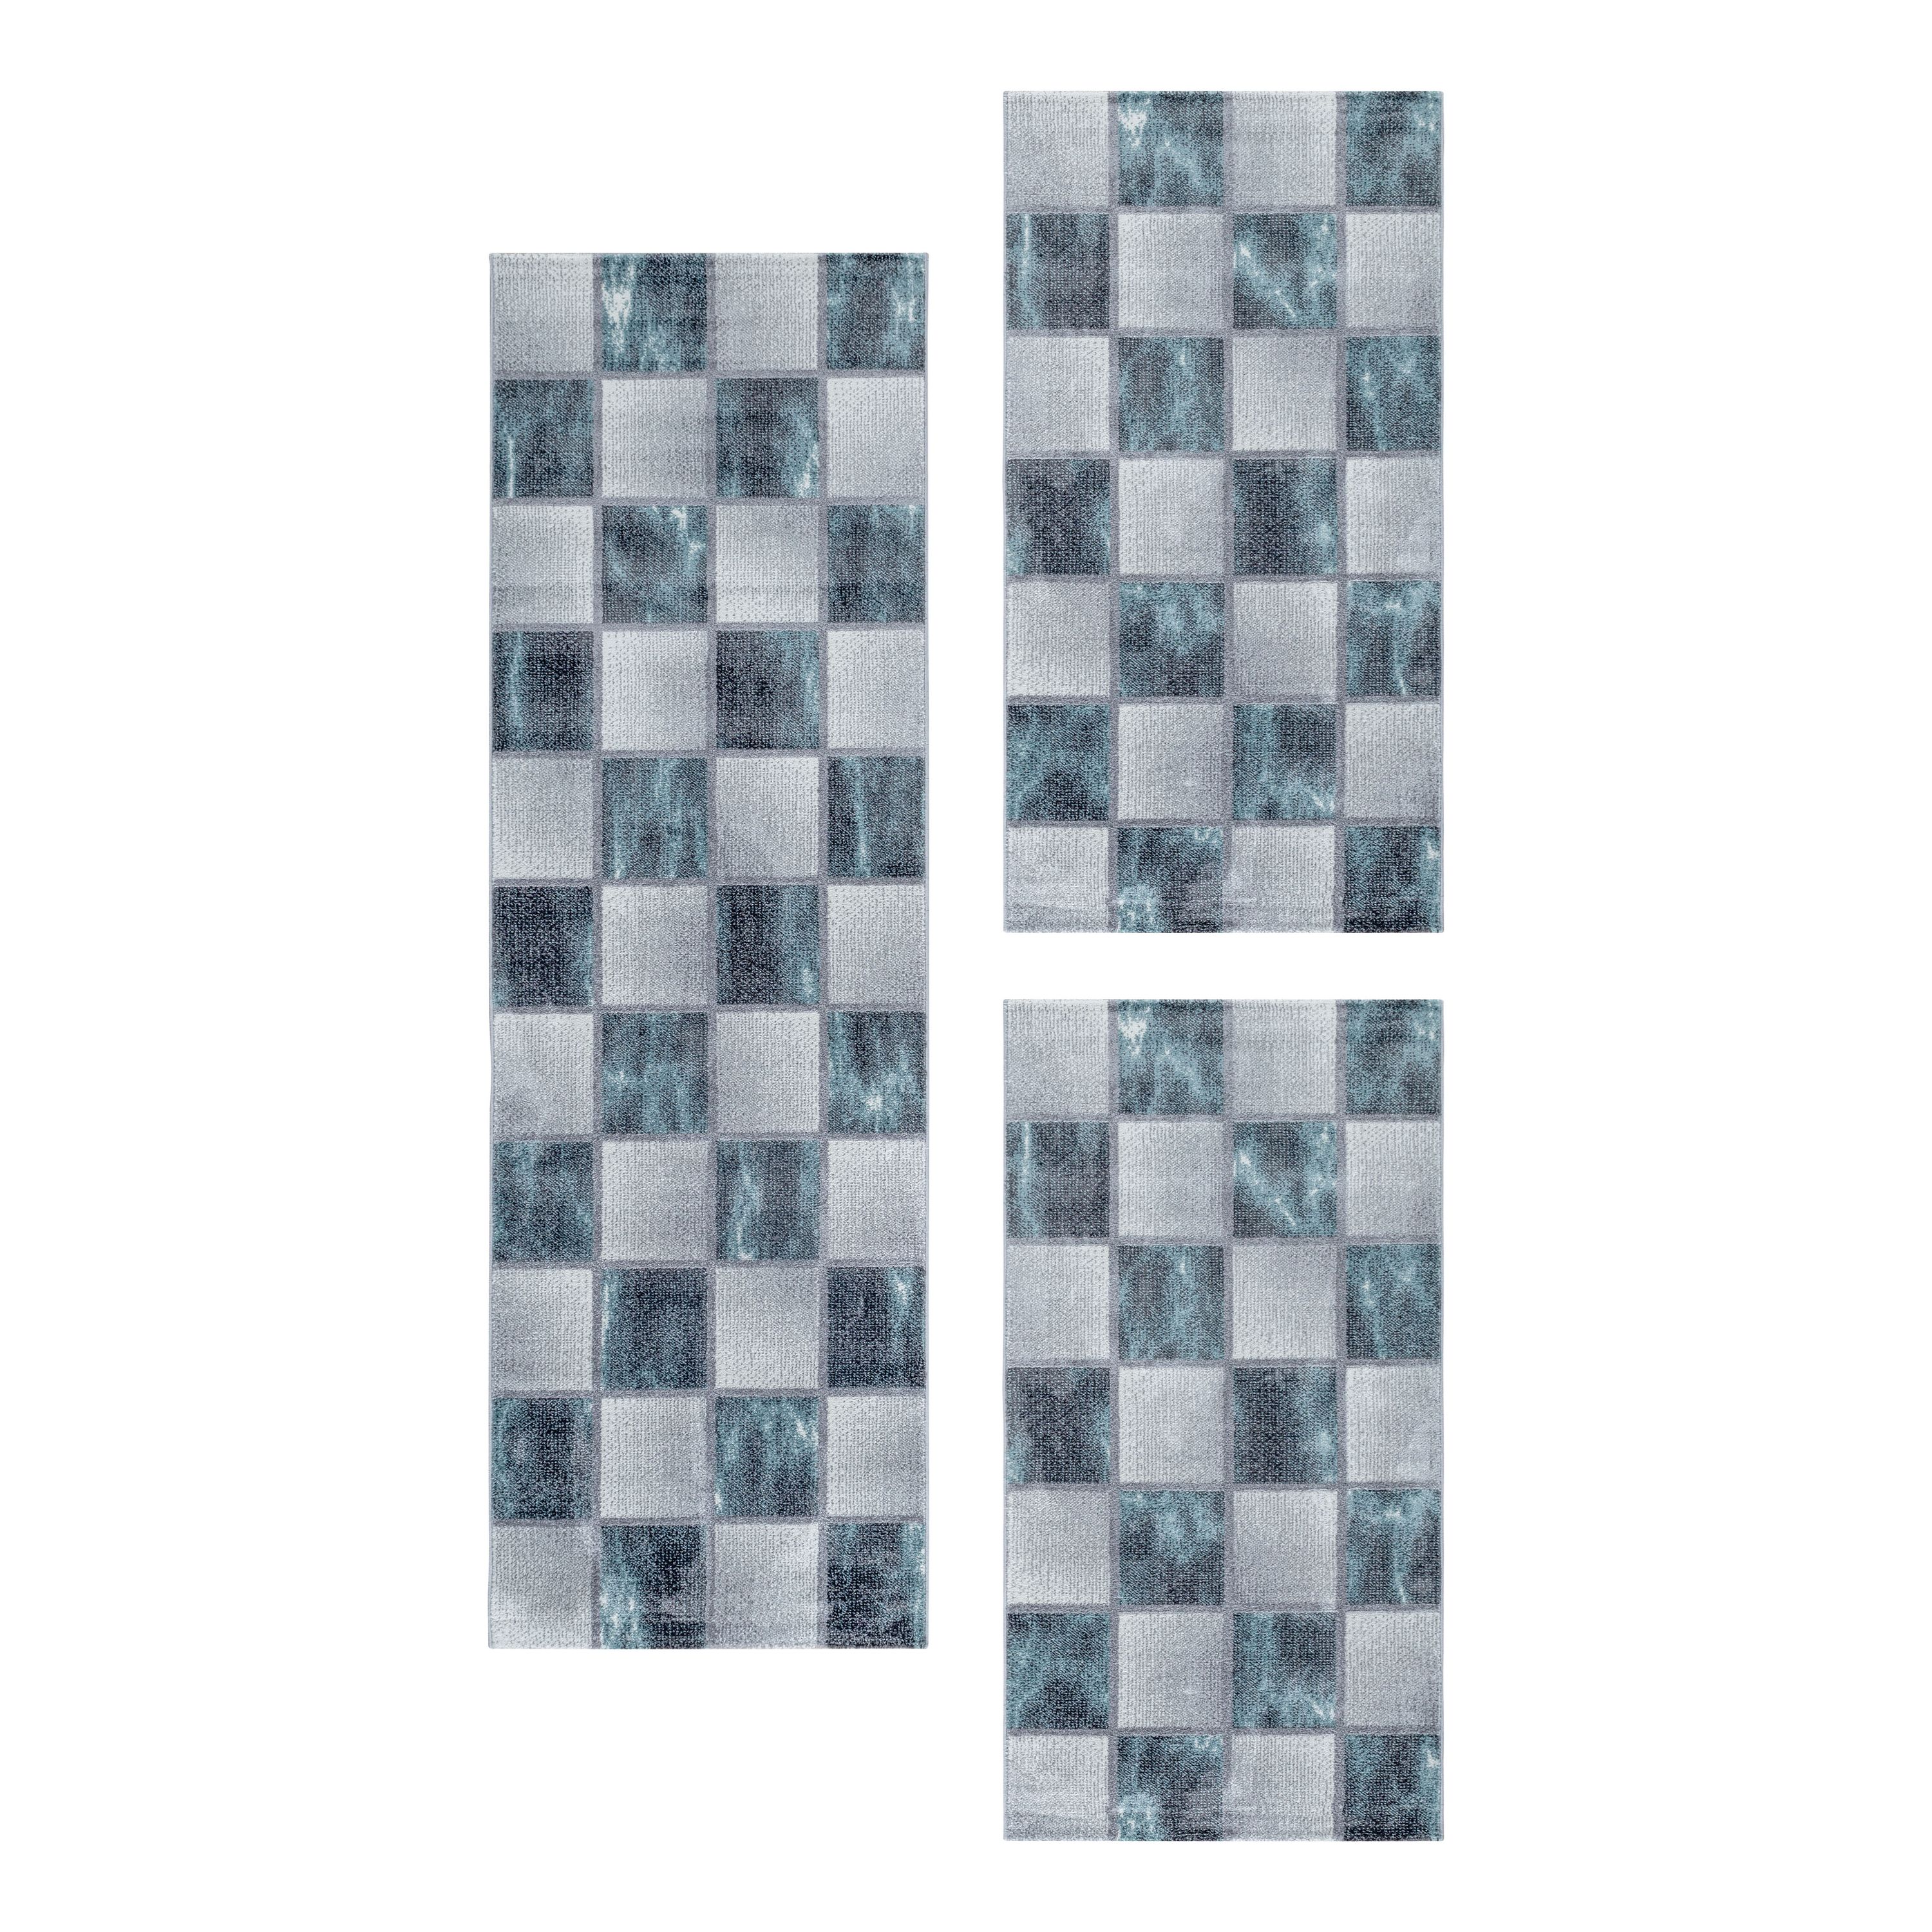 Kurzflor Teppich Bettset Blau Grau Quadrat Muster Marmoriert 3 Teile Läufer Soft